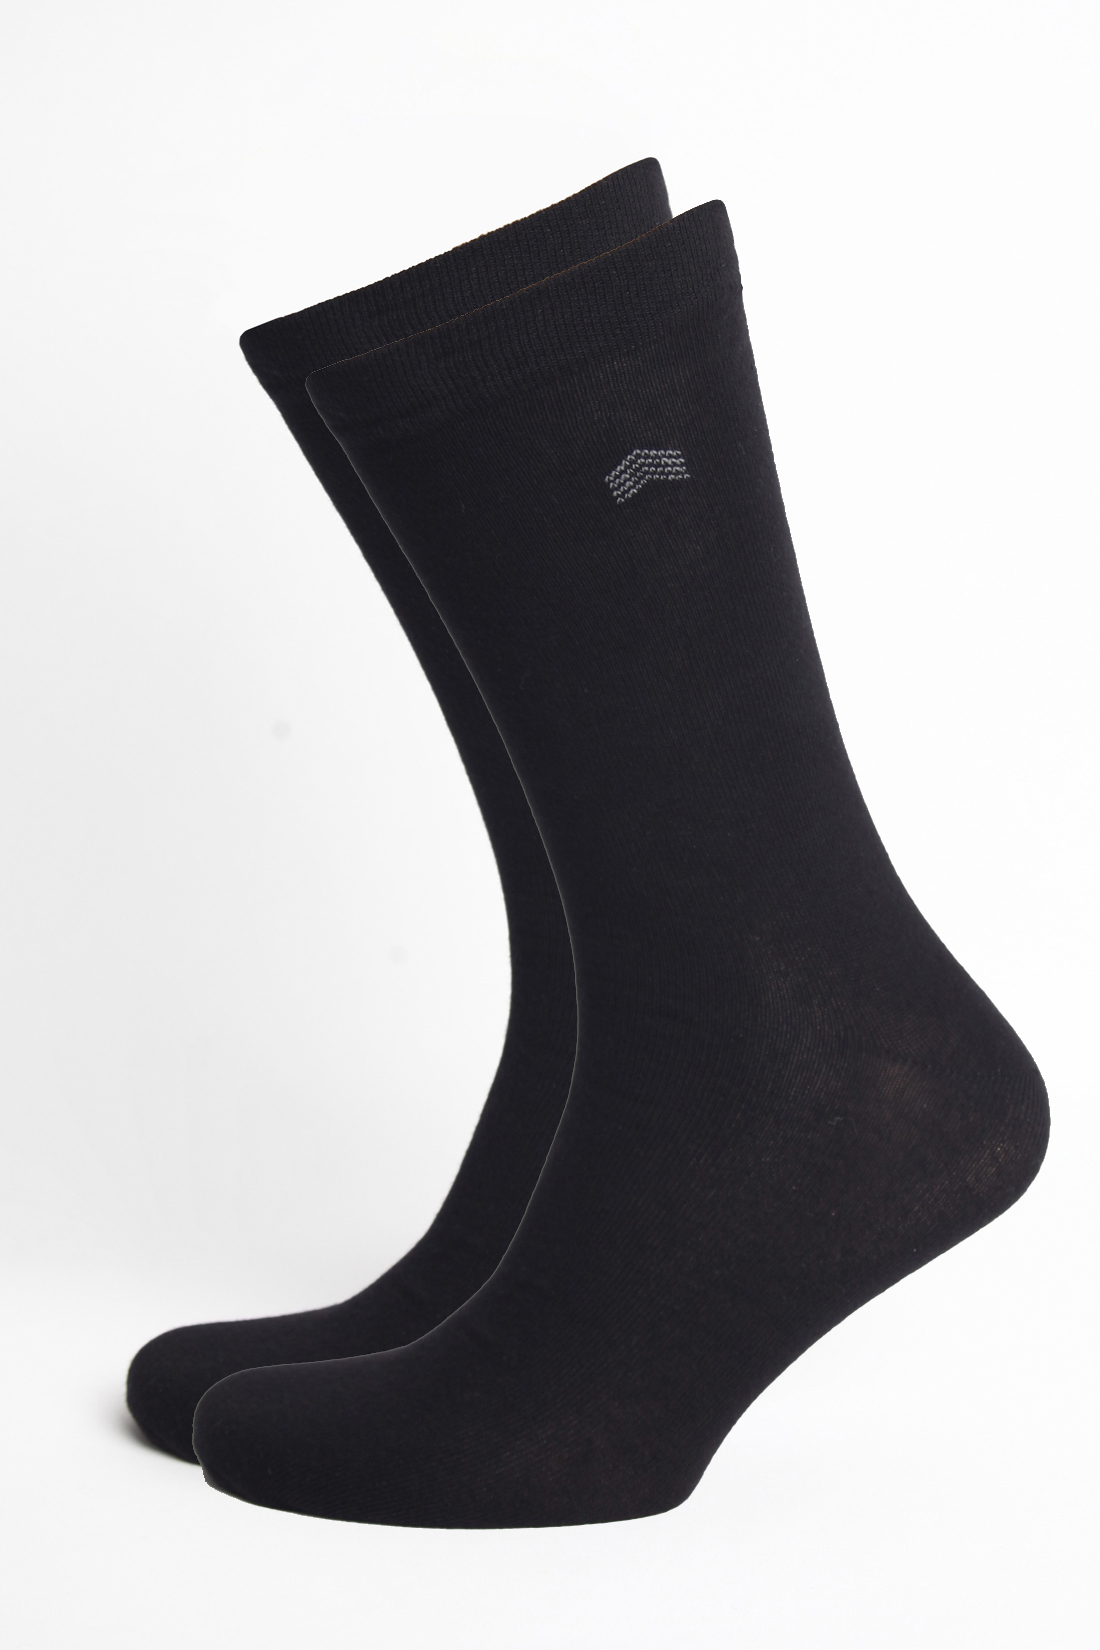 Мужские носки, 2 пары (арт. baon B891101), размер 43/45, цвет черный Мужские носки, 2 пары (арт. baon B891101) - фото 1